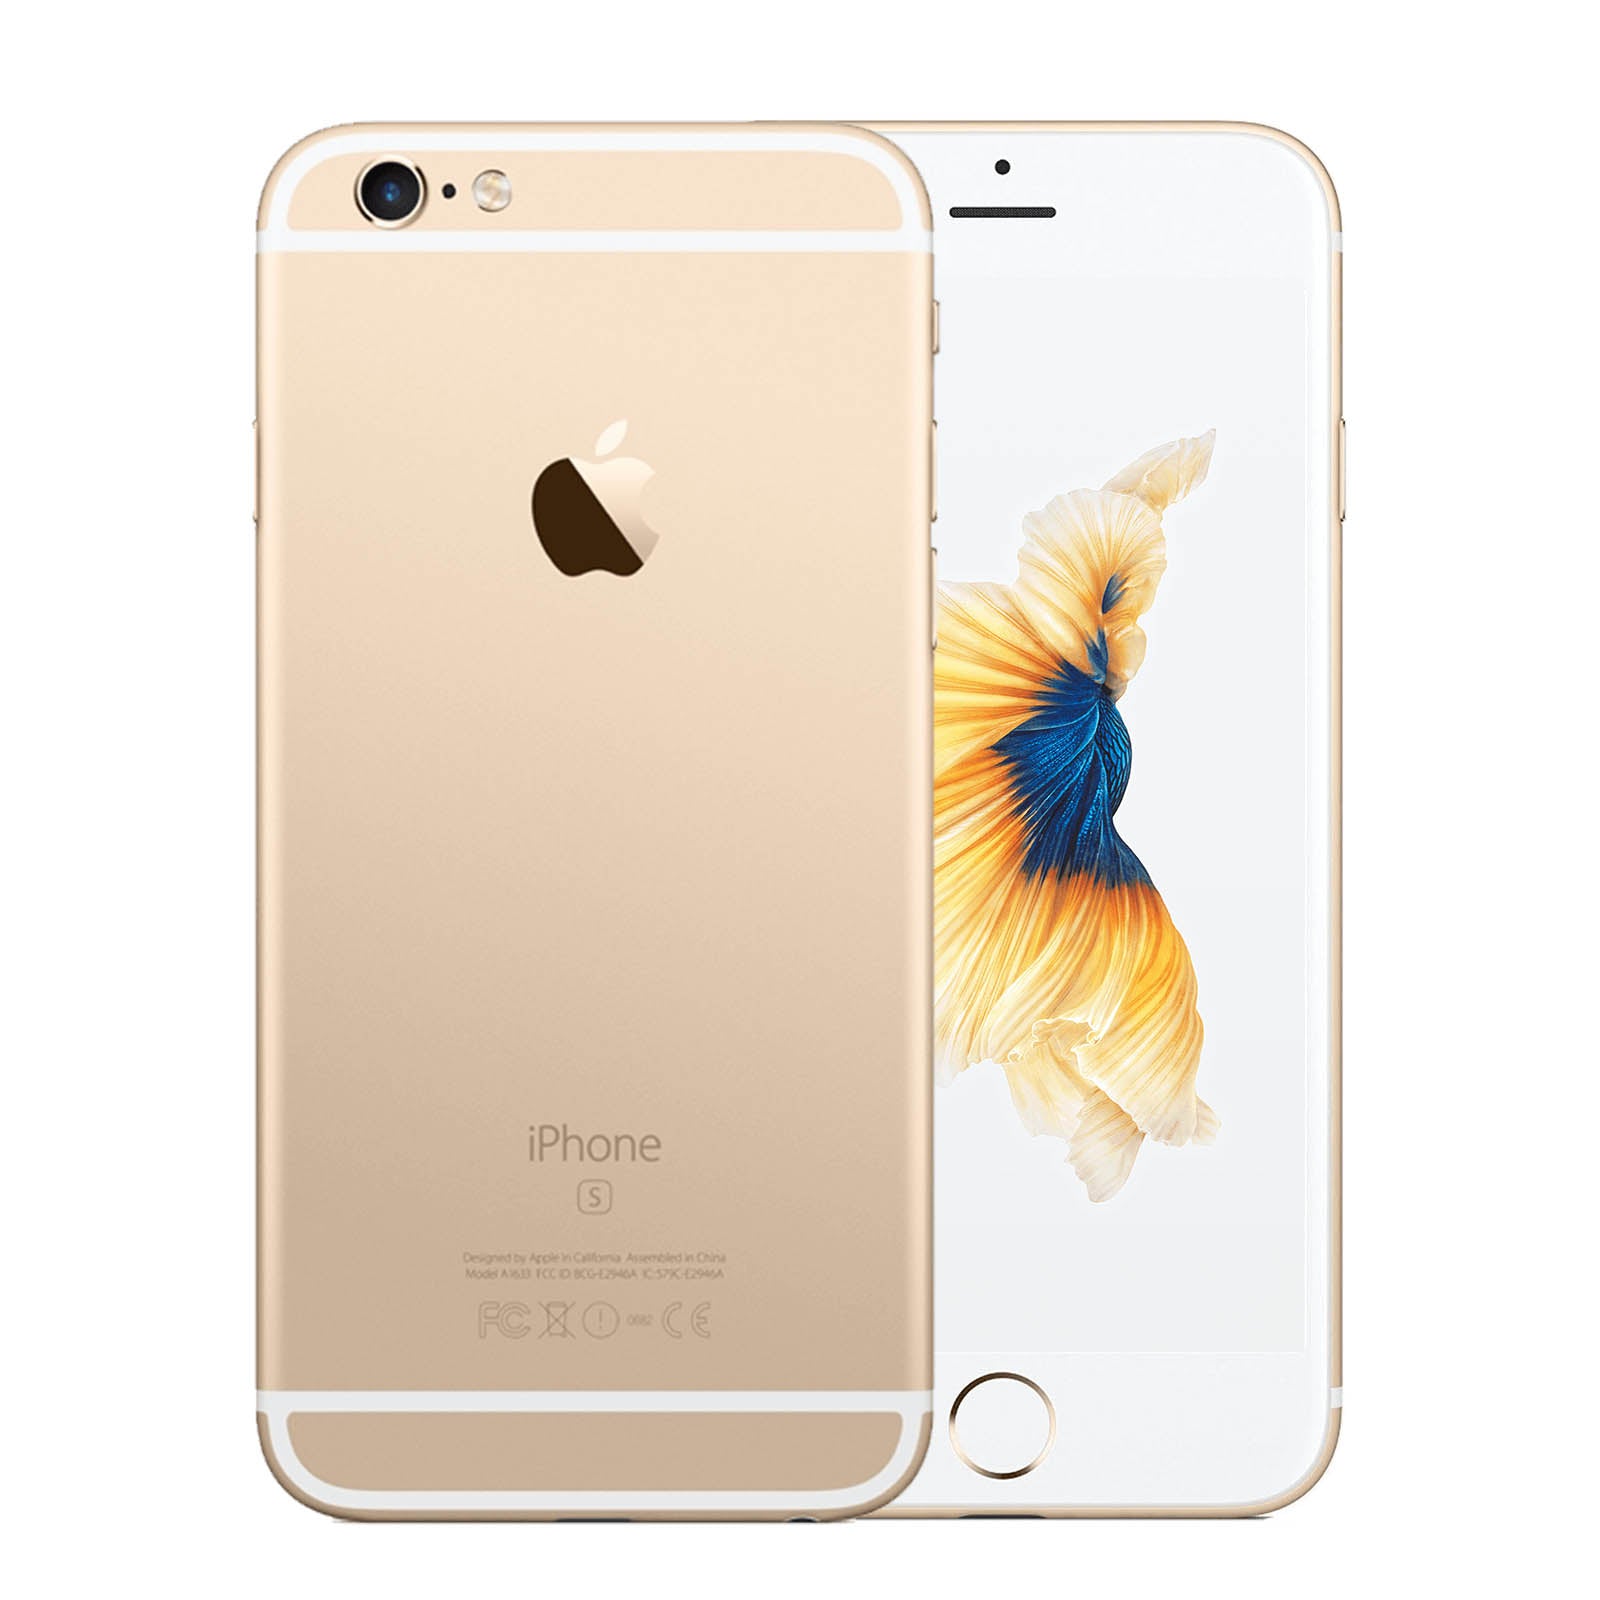 Apple iPhone 6S Plus 16GB Gold Good - Unlocked